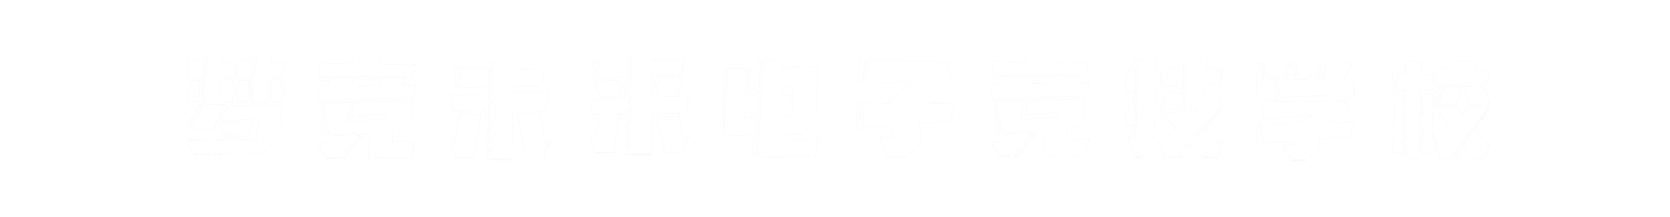 梦竞未来邯郸banner字